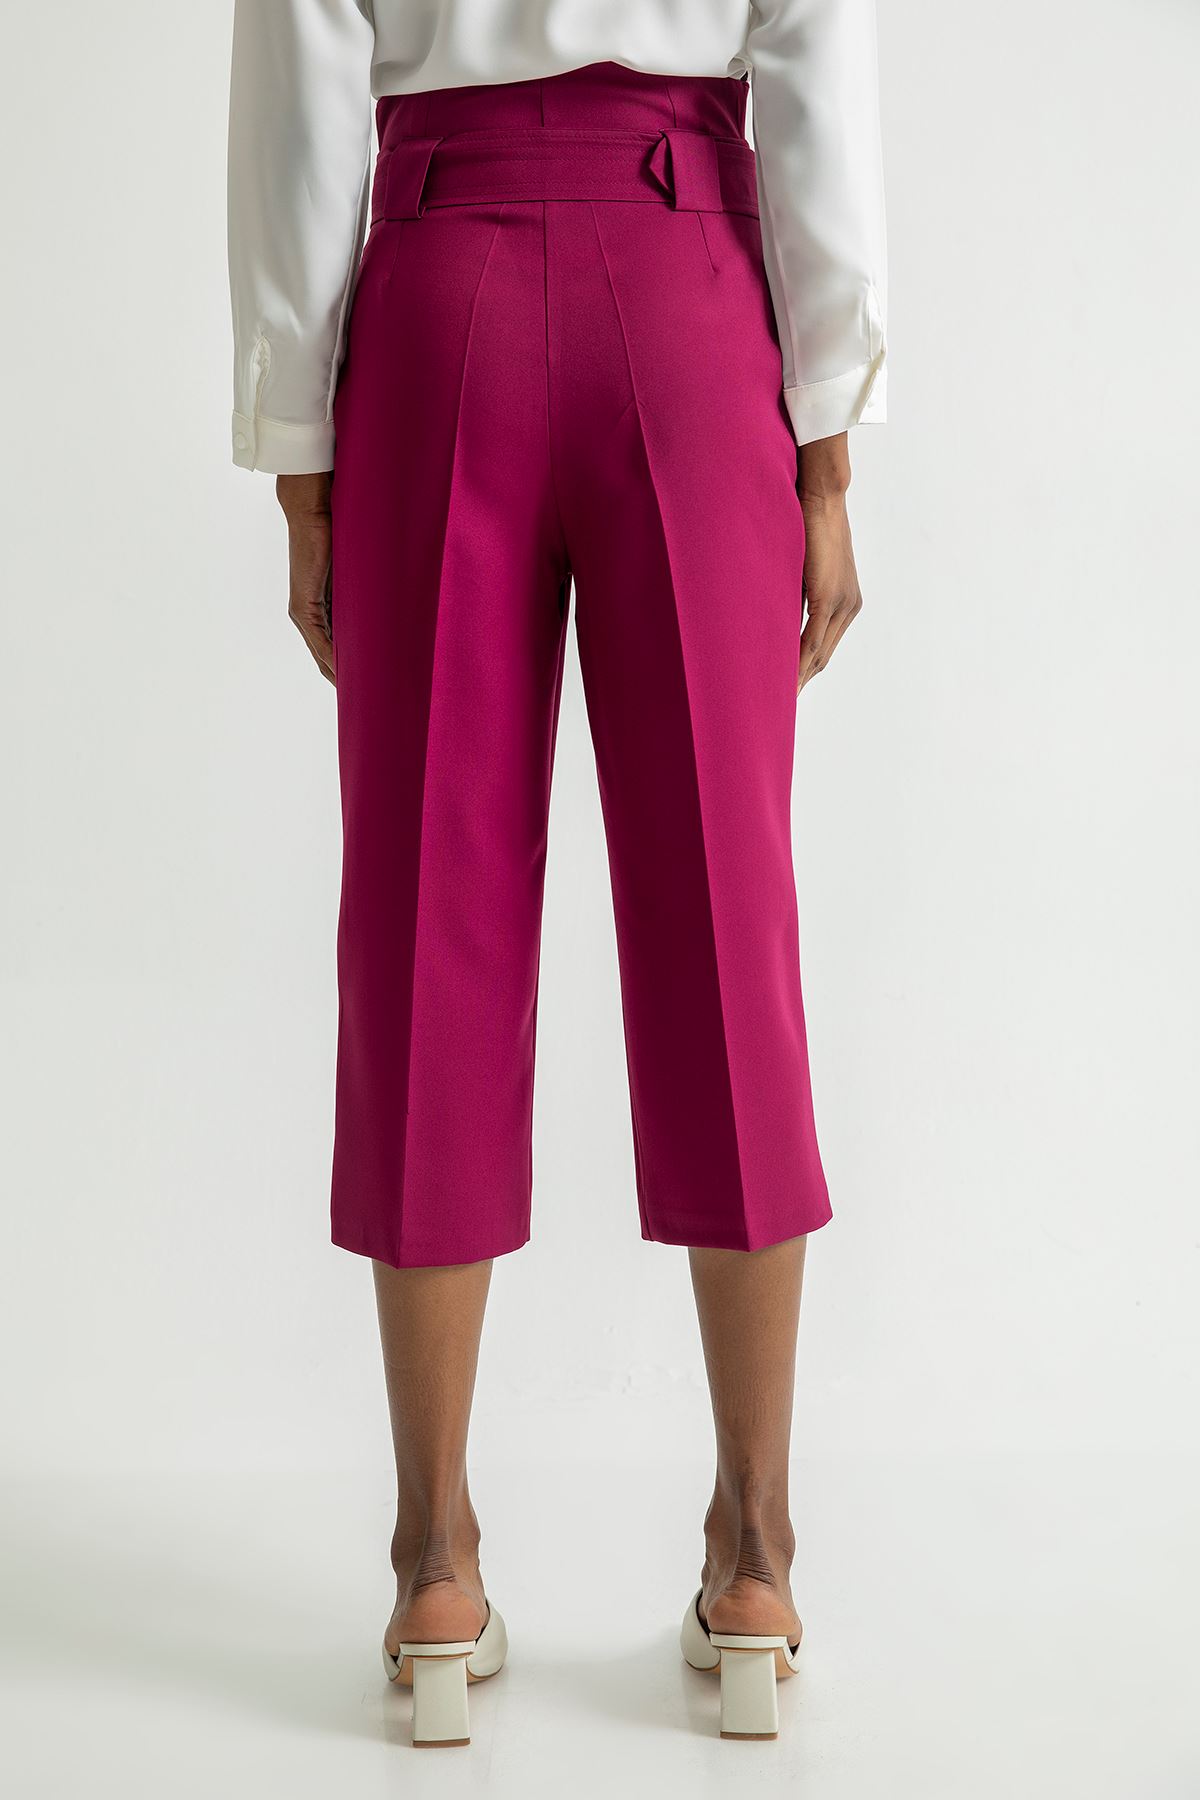 Atlas Fabric 3/4 Short Wide Wide Leg Women'S Trouser - Plum